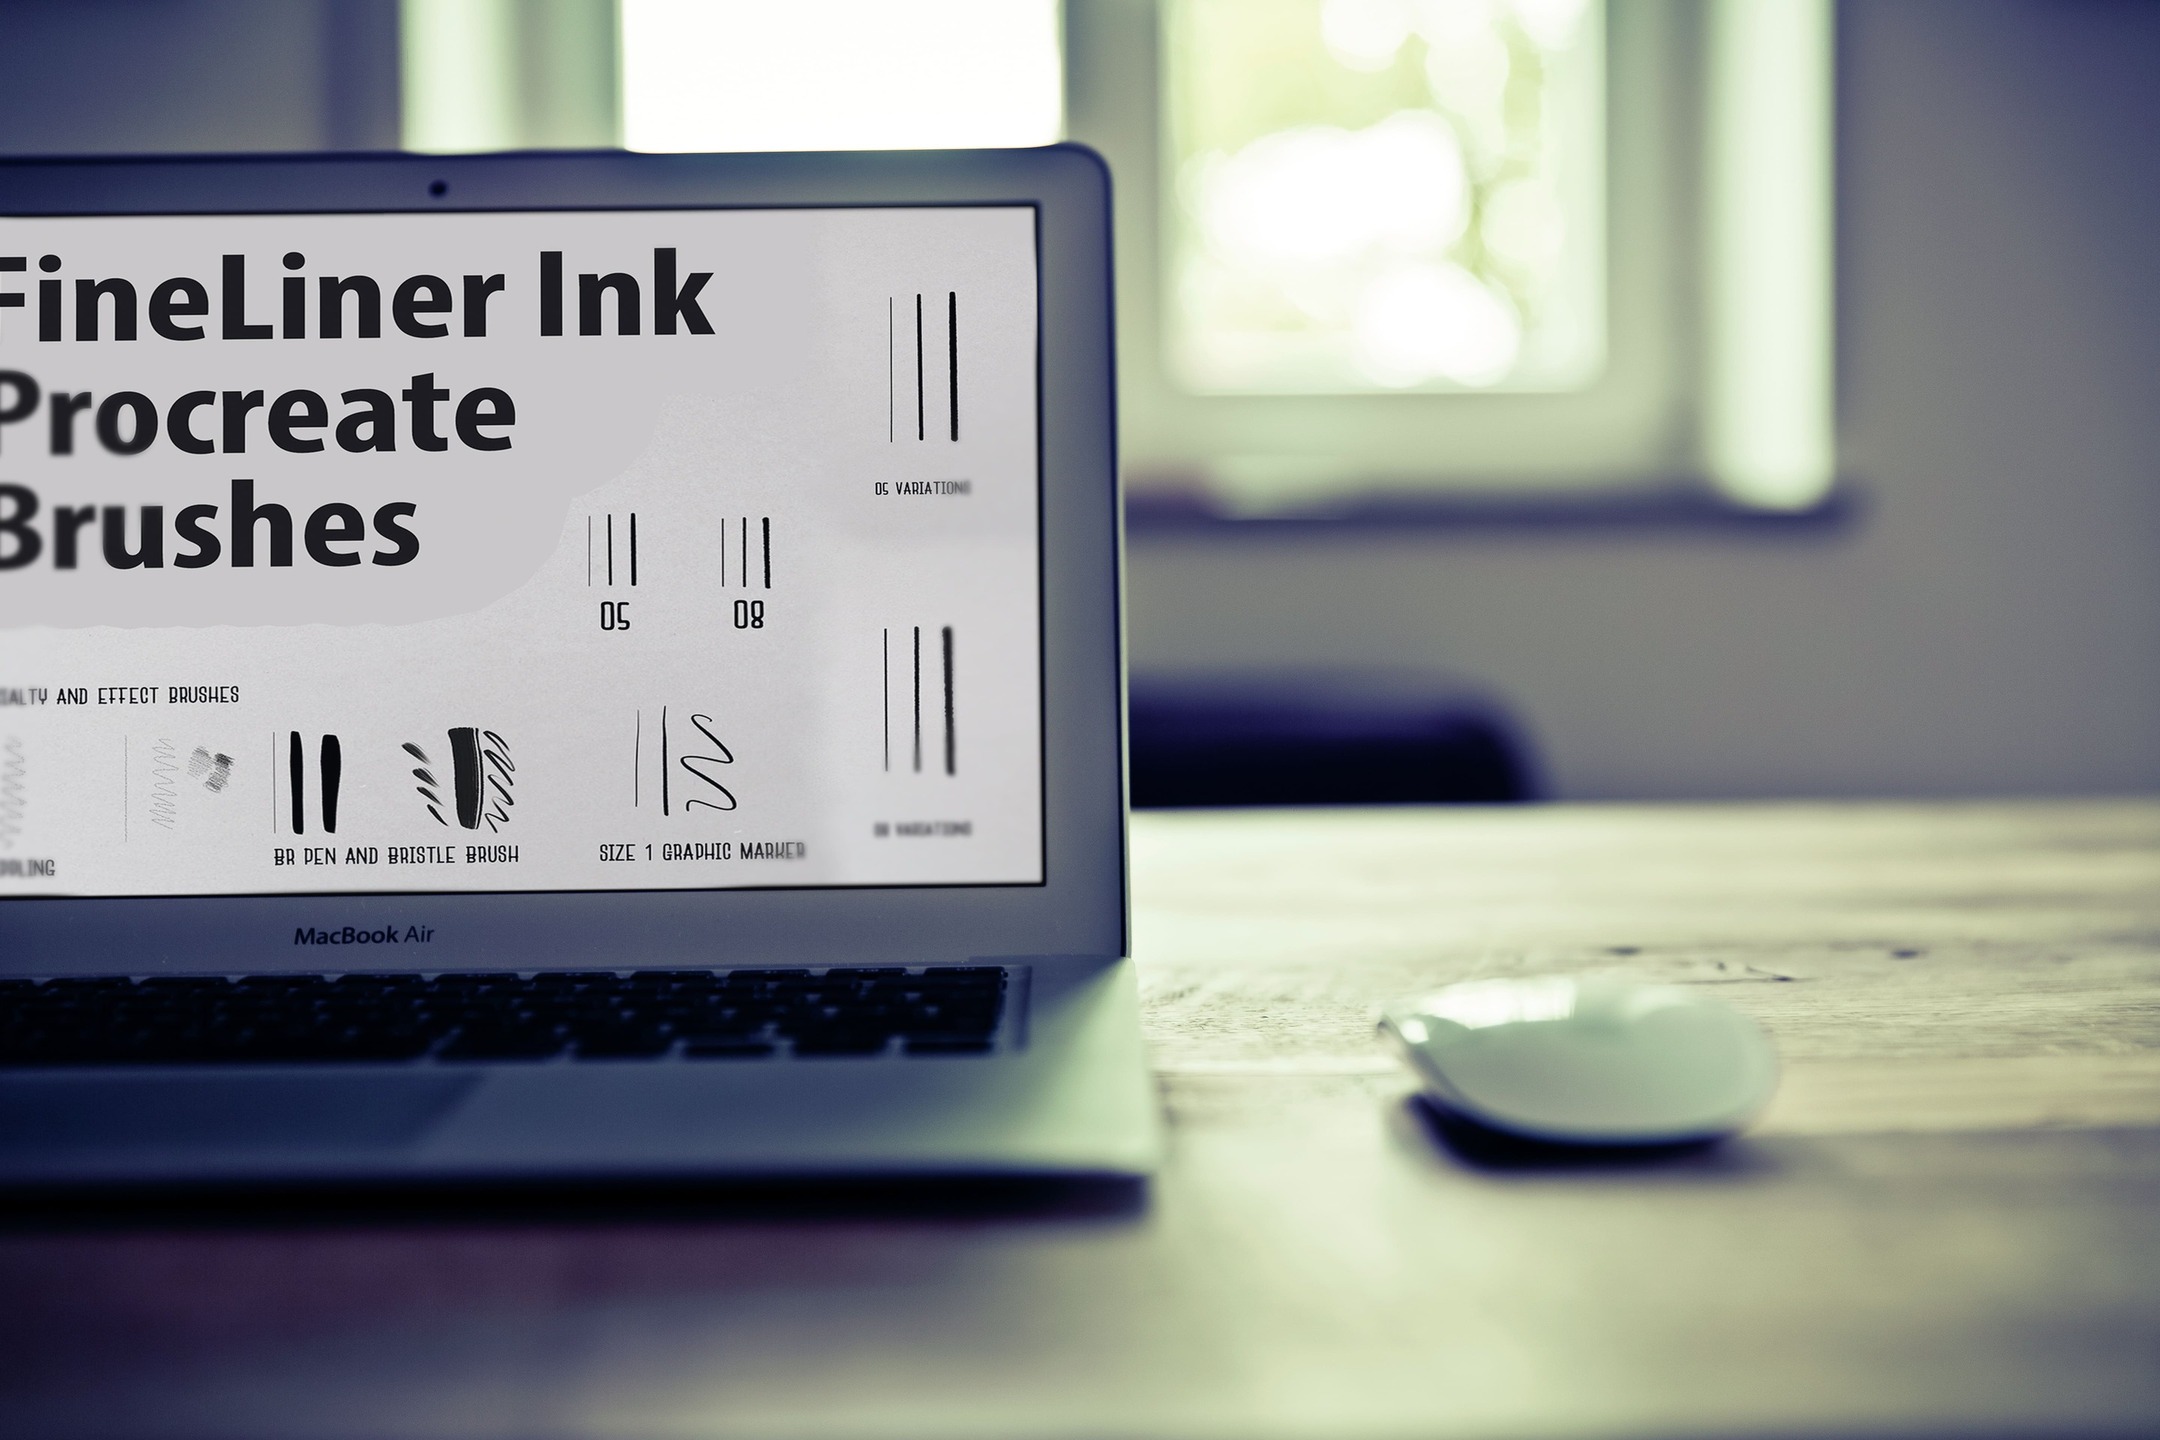 FineLiner Ink Procreate Brushes On The Laptop.